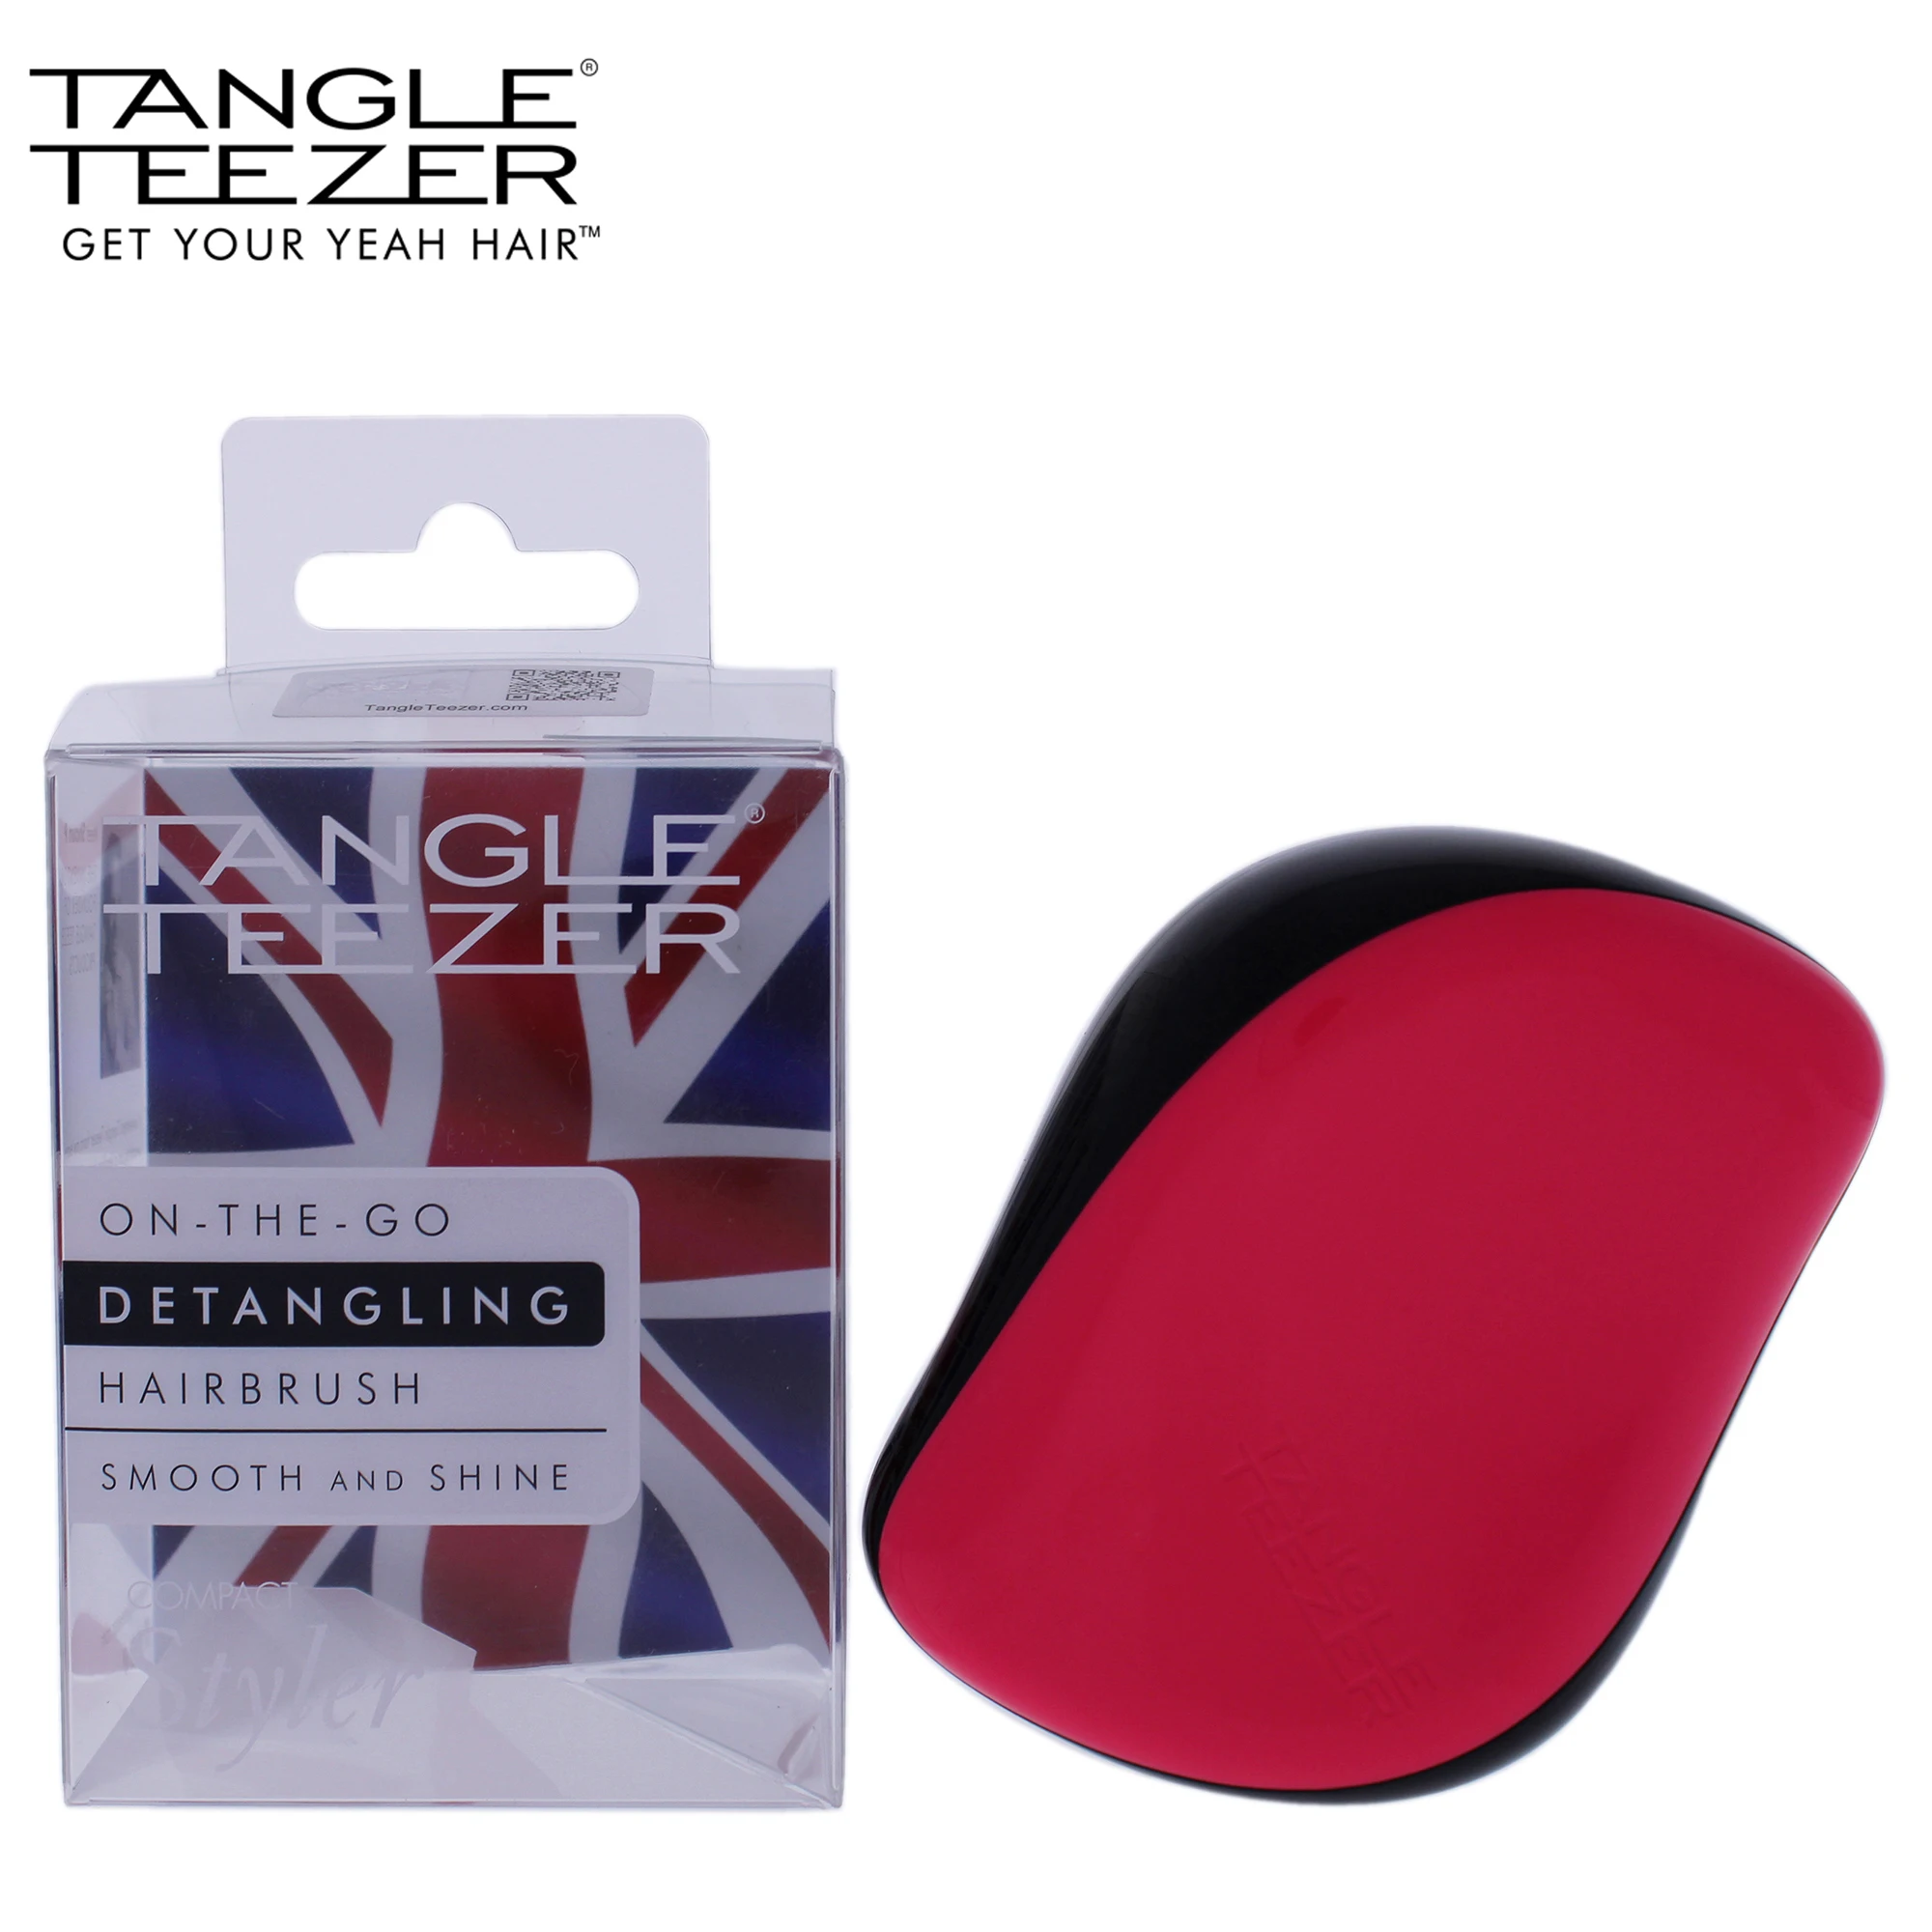 

Tangle Teezer Hair Brush Compact Styler Detangling Hairbrush - Black-Pink for Unisex - 1 Pc